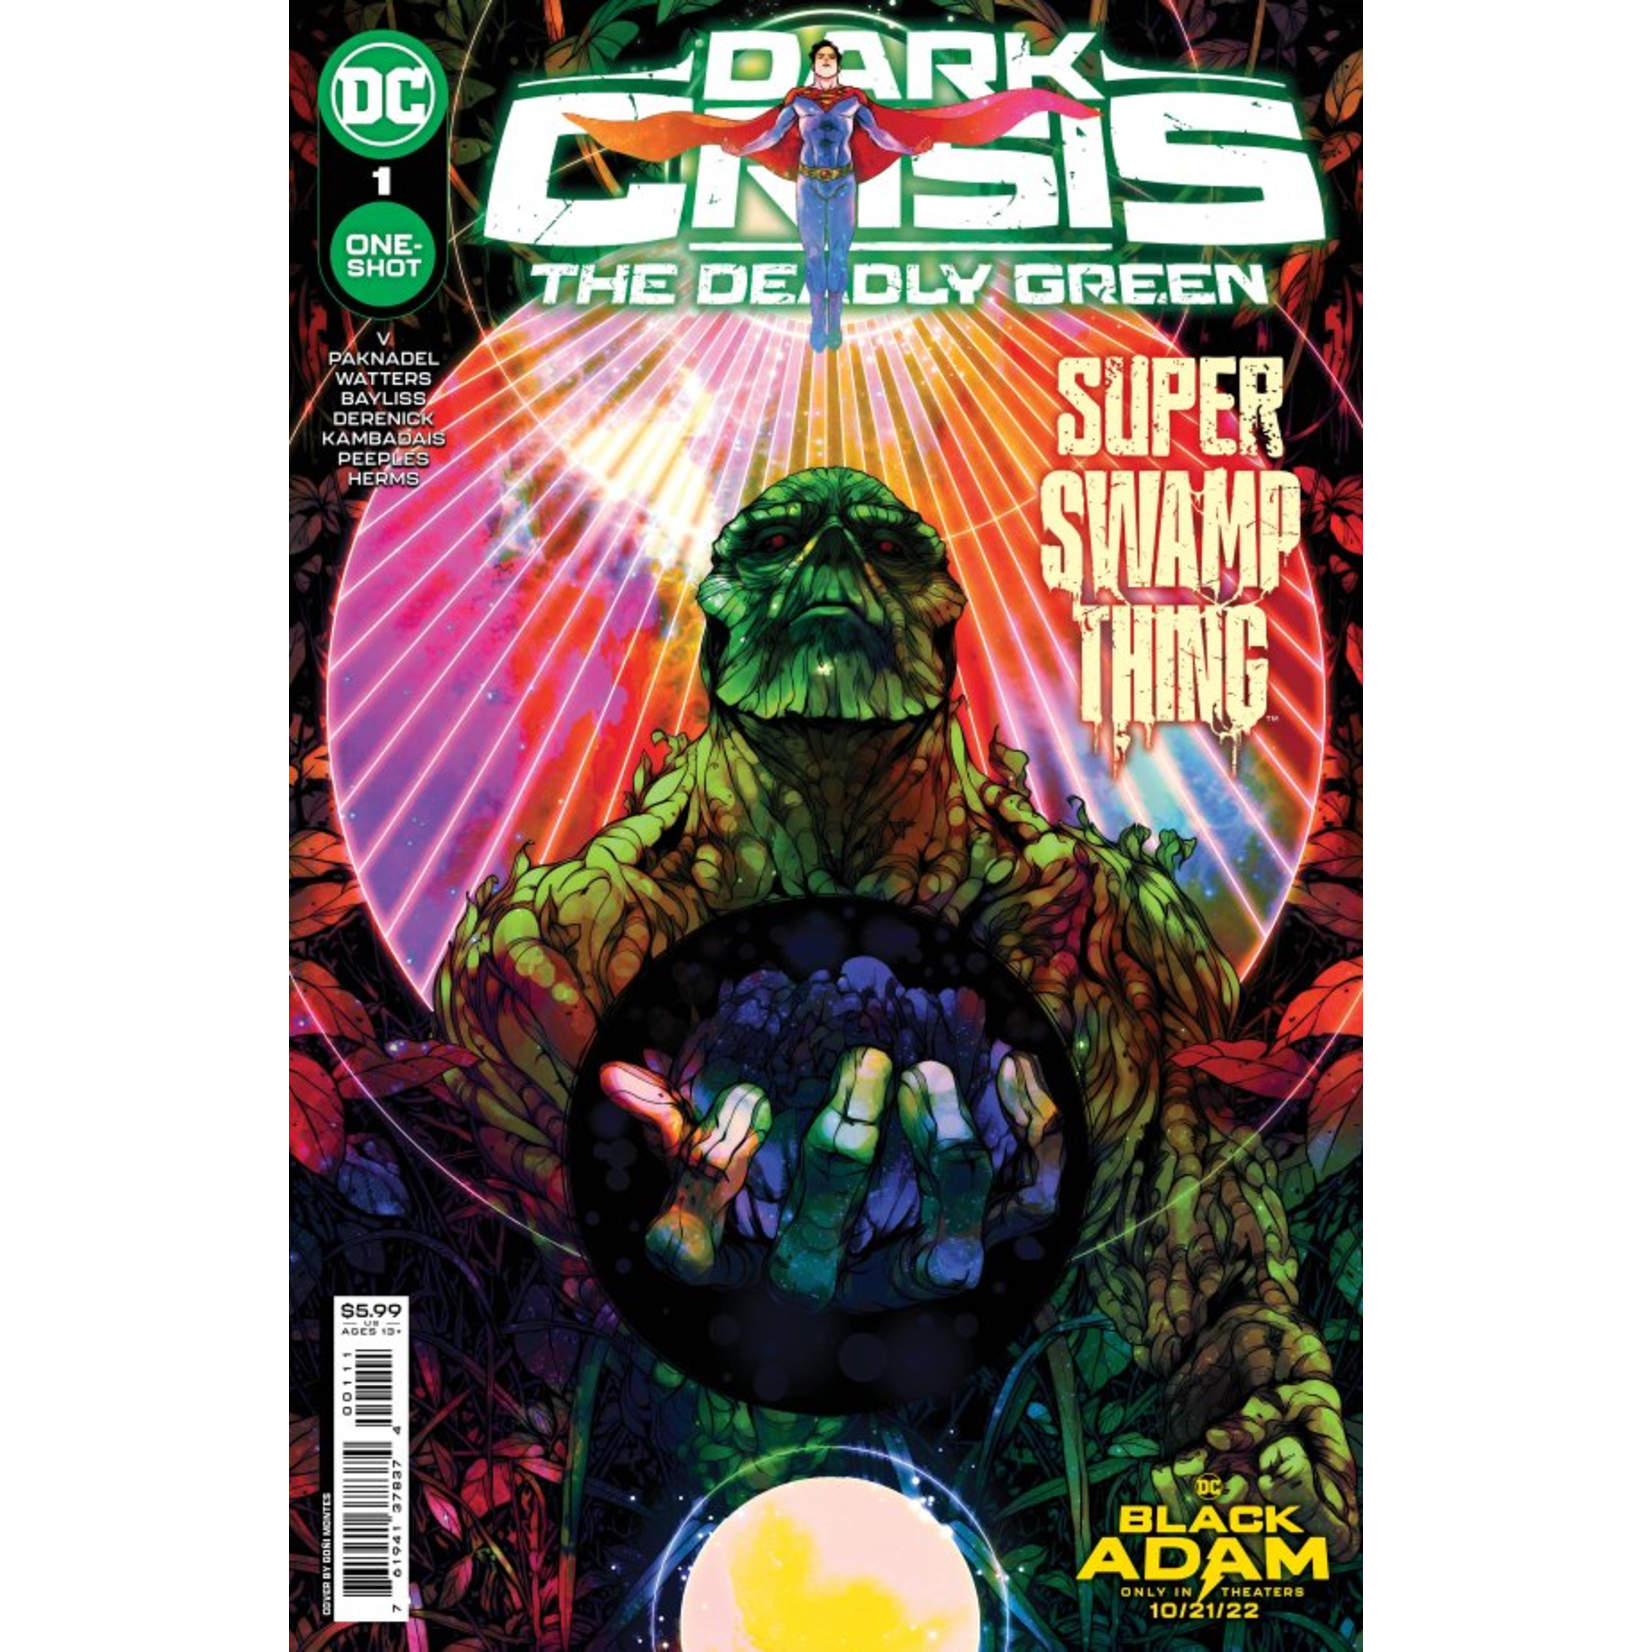 DC Comics DARK CRISIS THE DEADLY GREEN #1 (ONE SHOT) CVR A